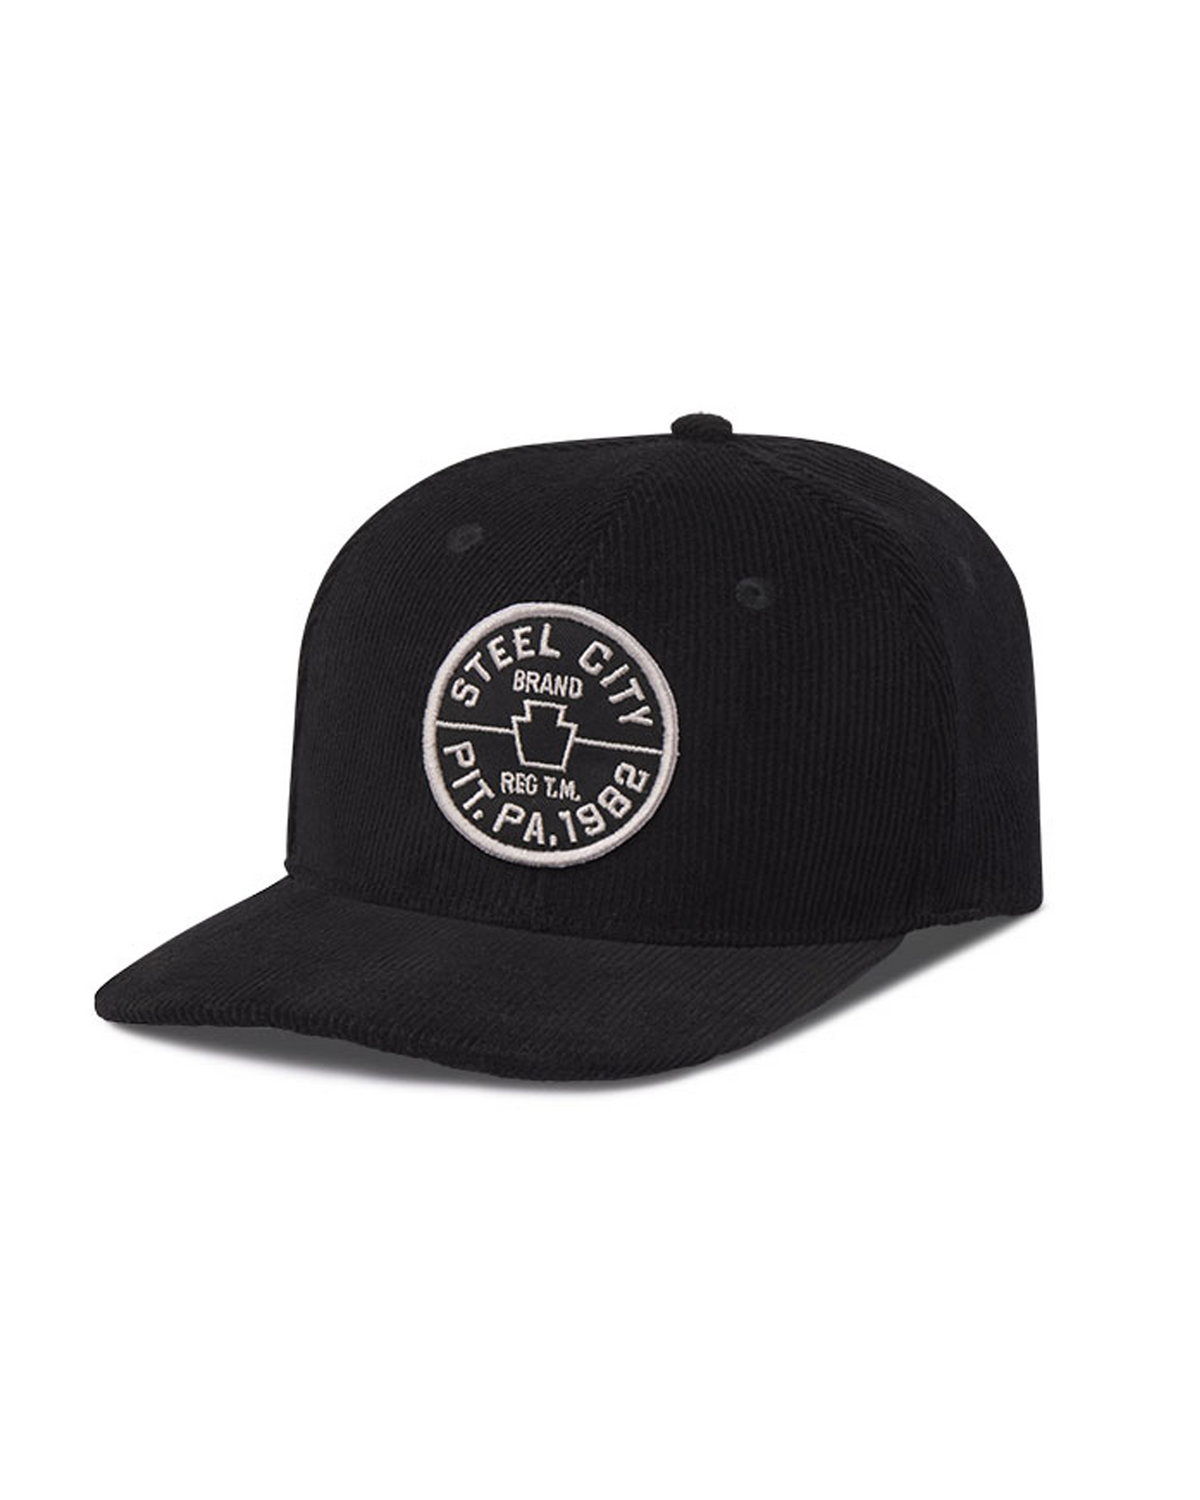 Baseball Hats, Headwear, Trucker Hats and Beanies | Steel City Brand